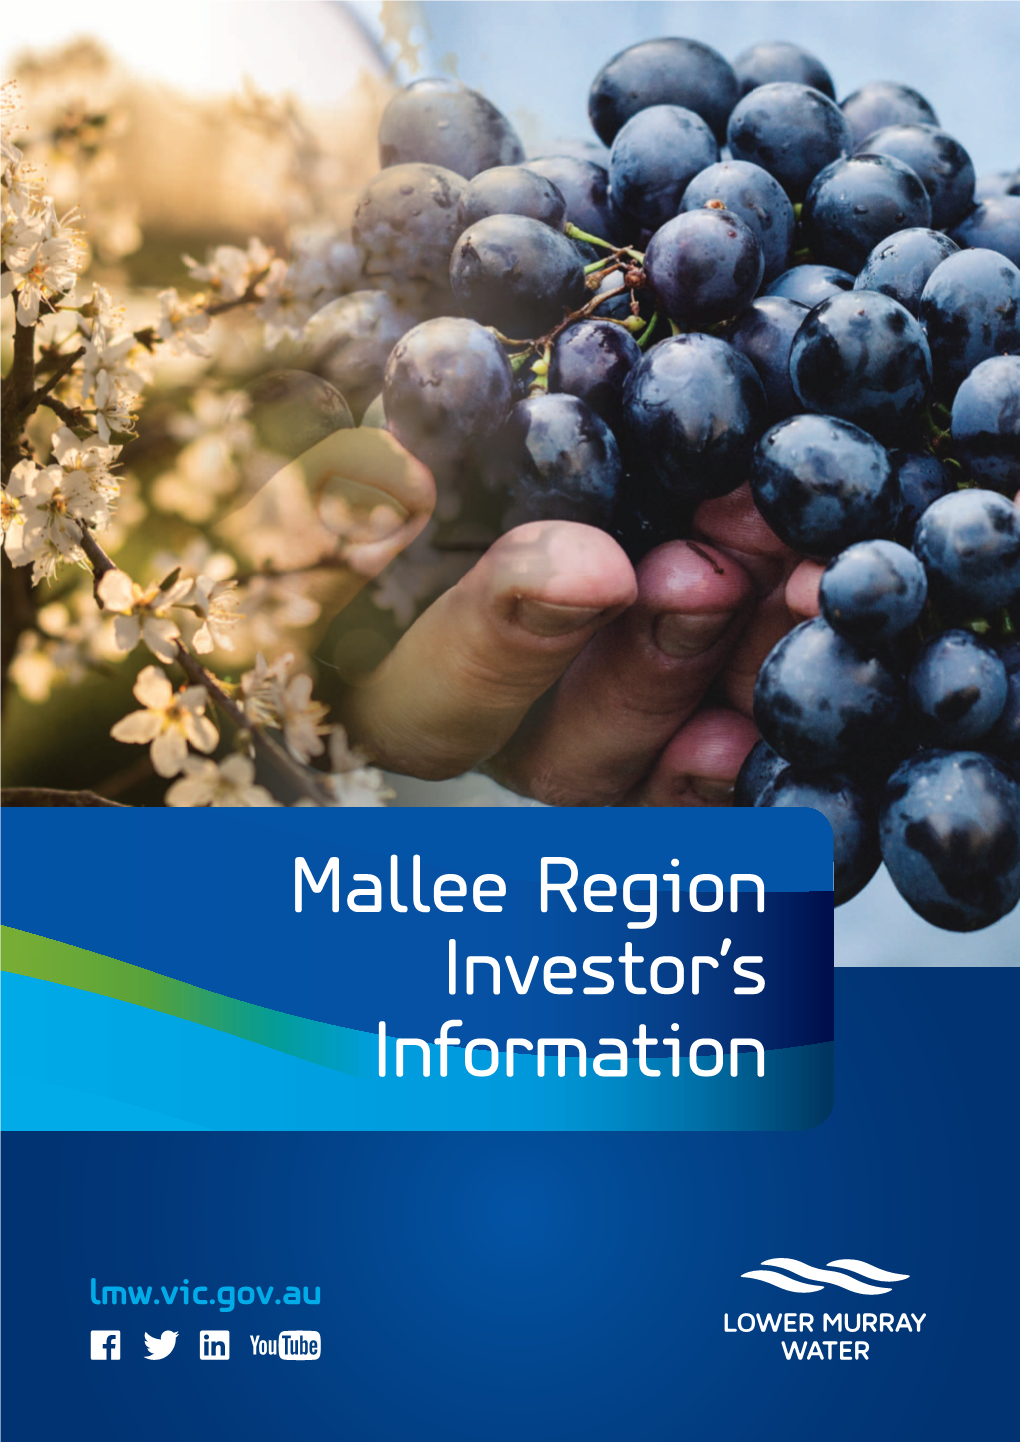 Mallee Region Investor's Information